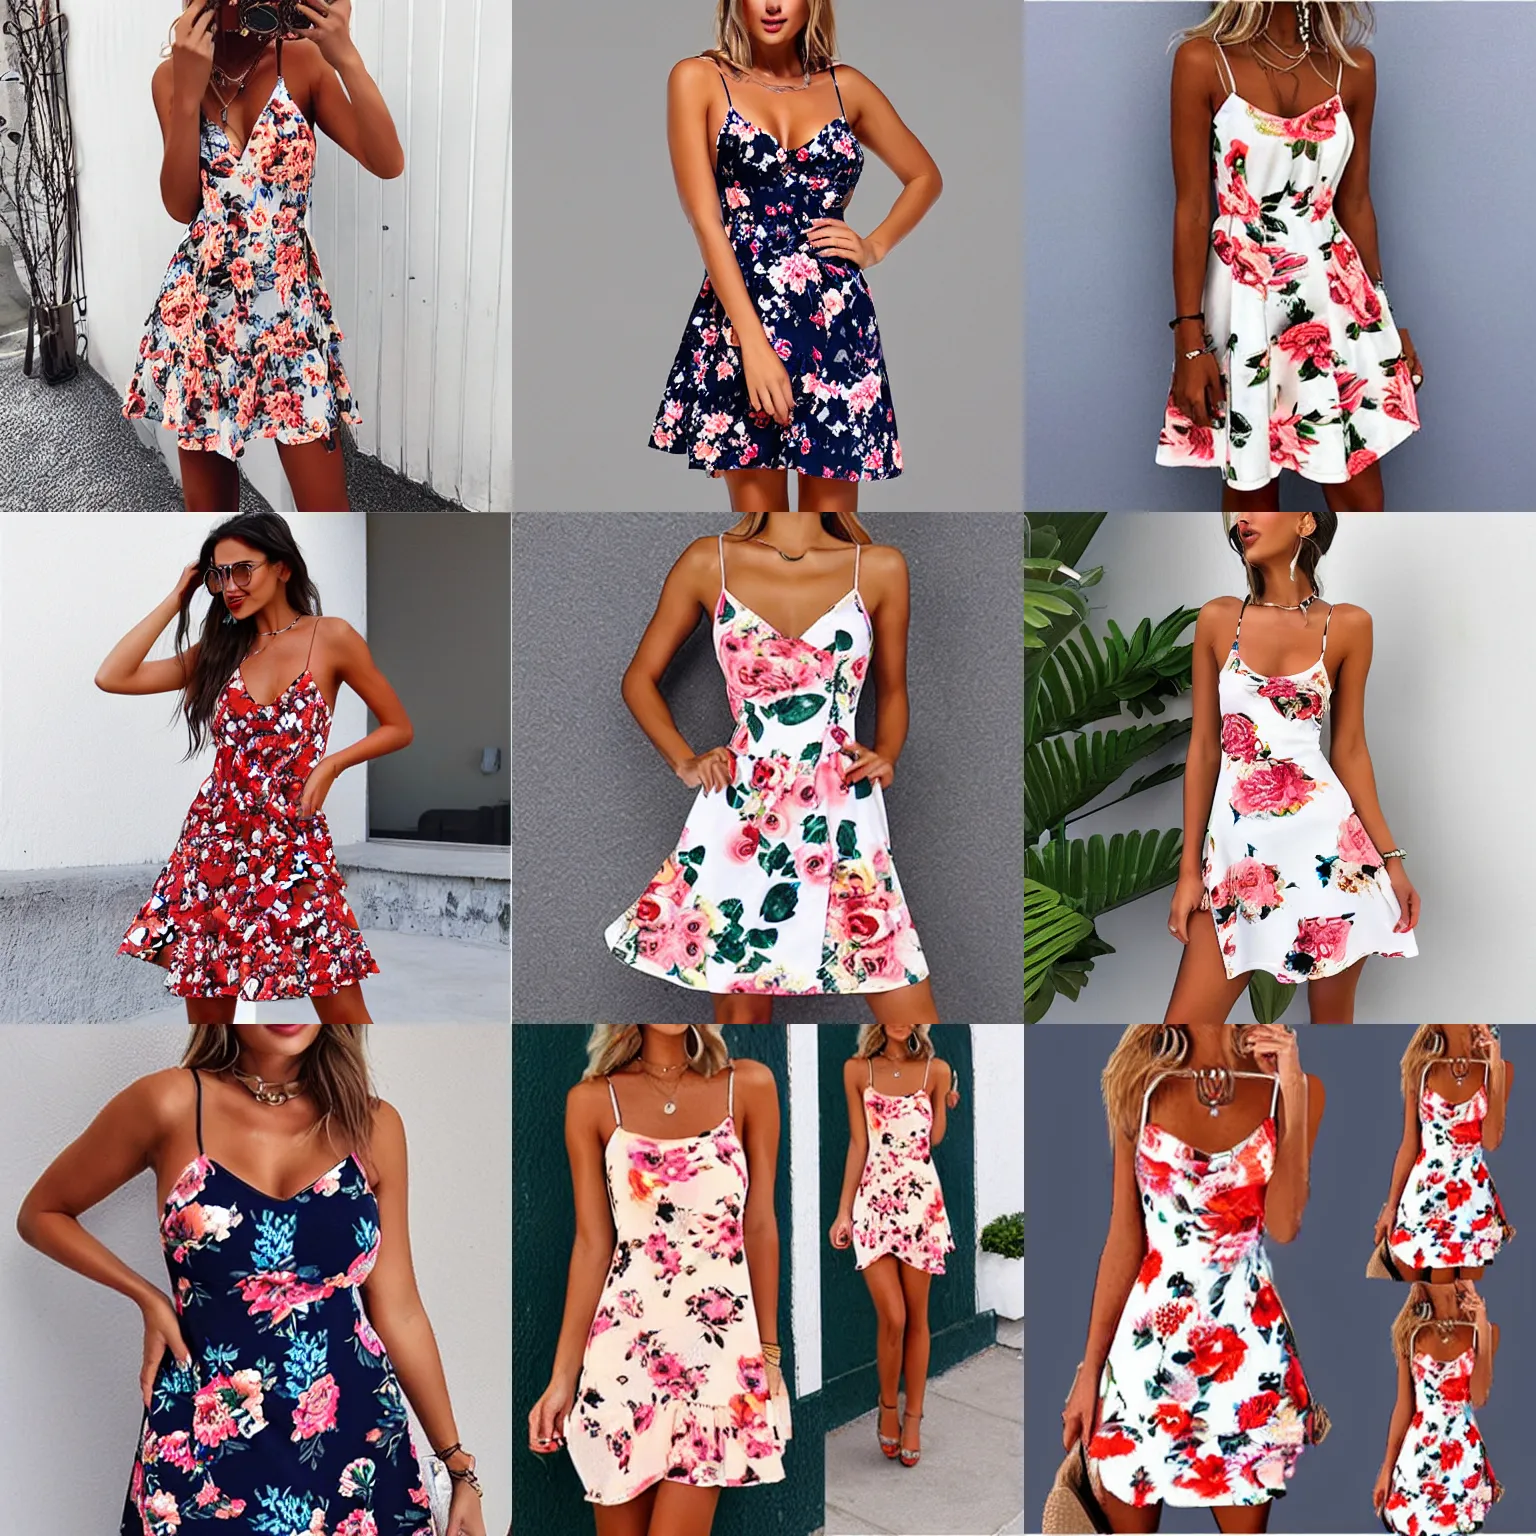 Prompt: new women's summer floral sleeveless spaghetti strap backless casual dress short dress mini dress party dress plus size s - 5 xl